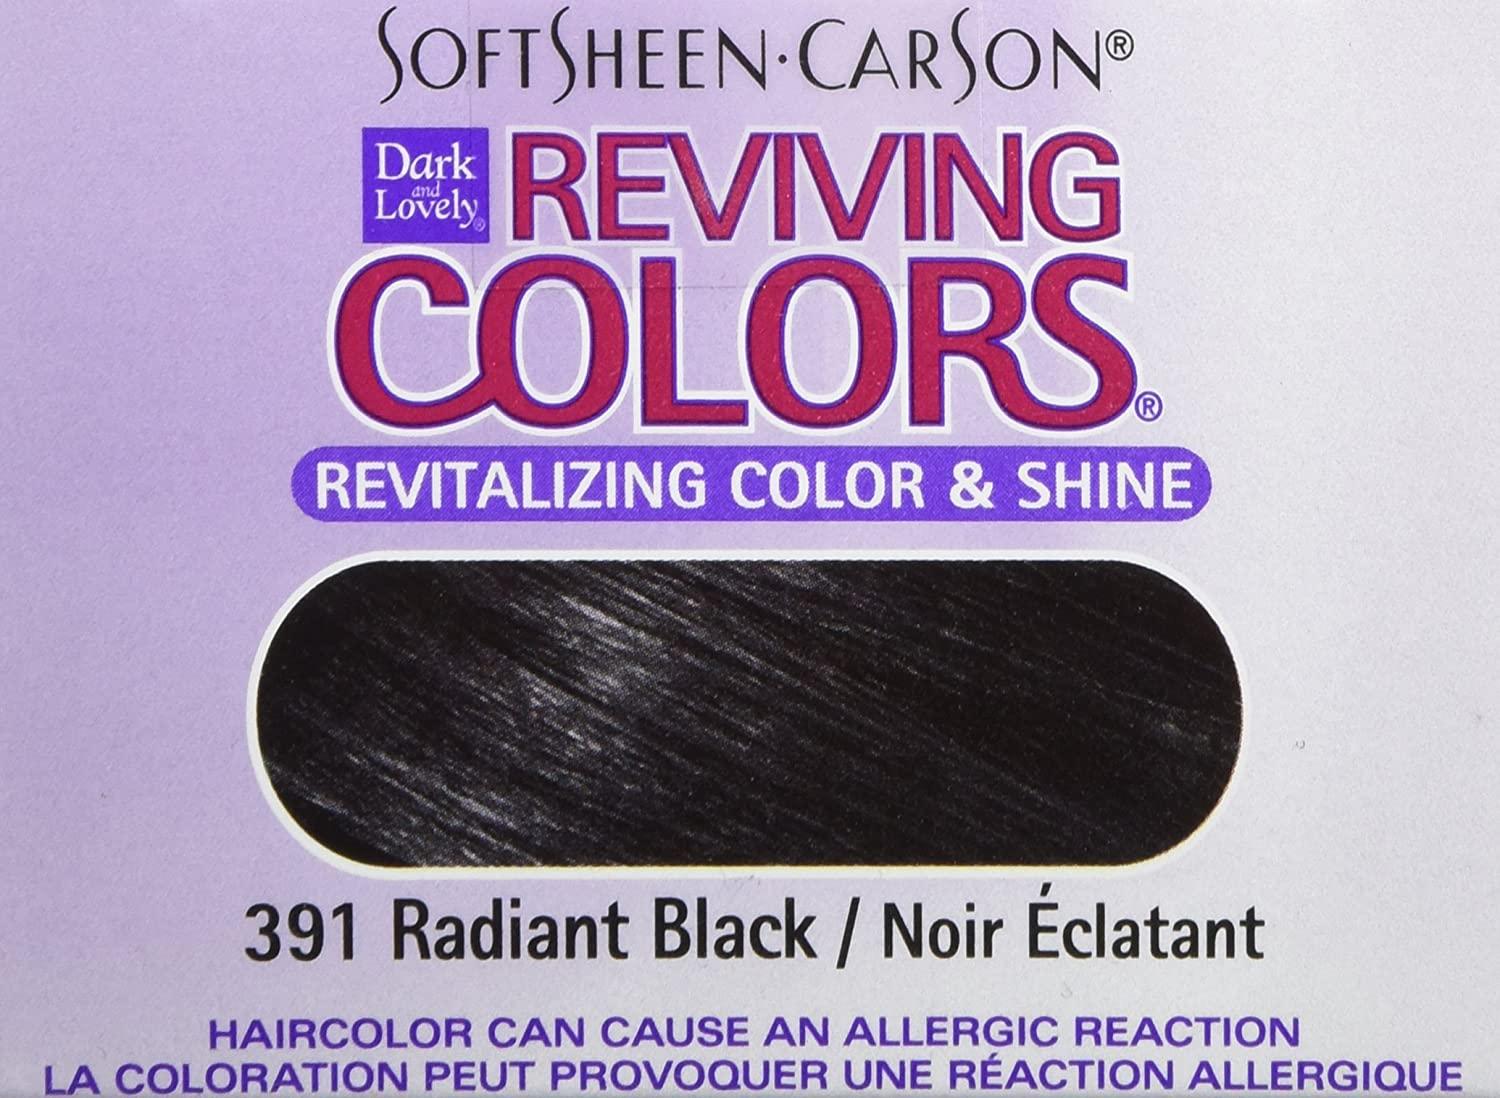 SoftSheen-Carson Dark and Lovely Reviving Colors Nourishing Color & Shine, Radiant Black 391